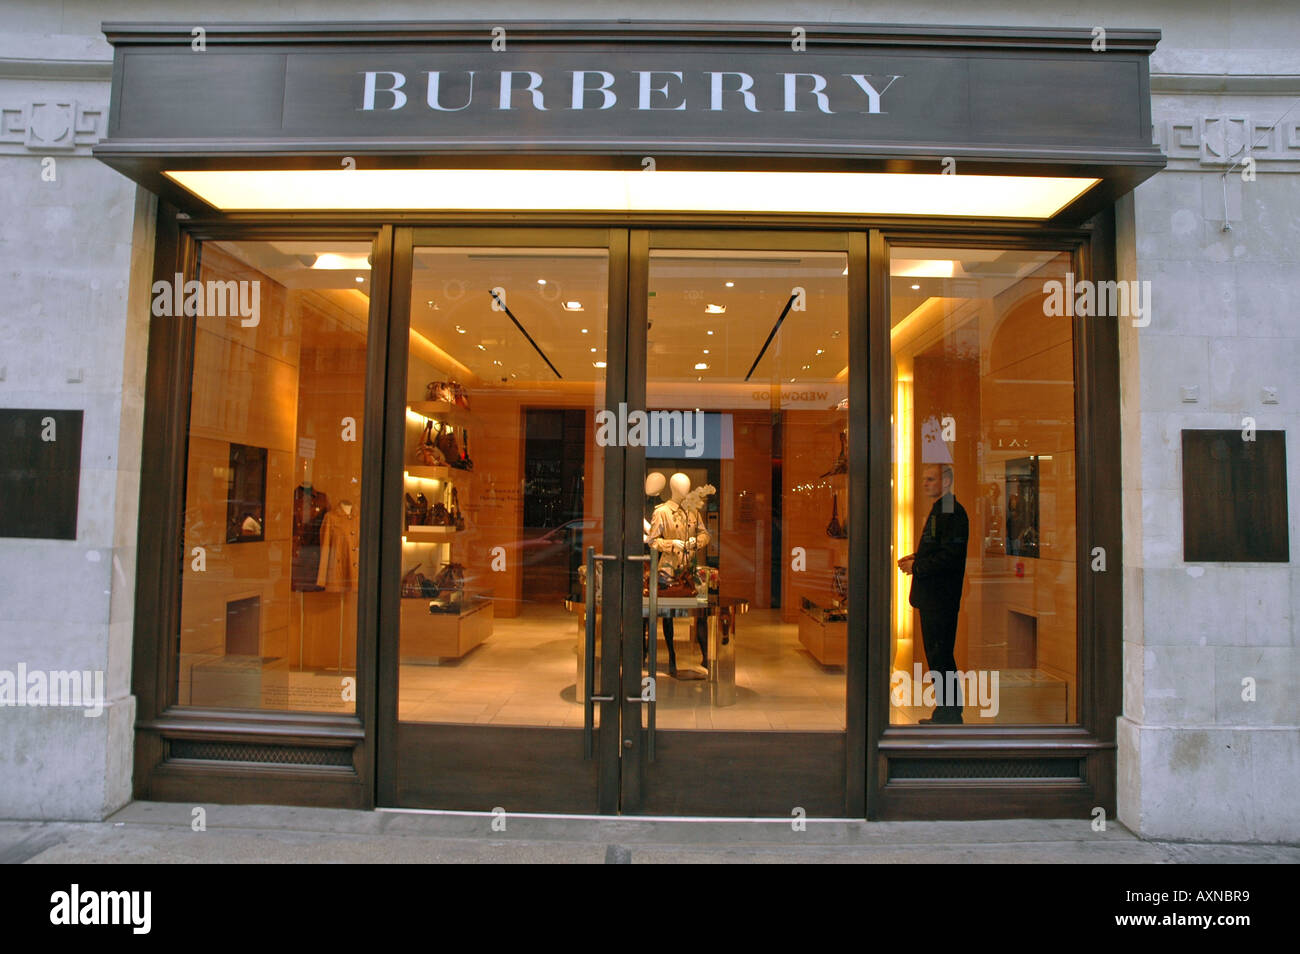 burberry uk online store